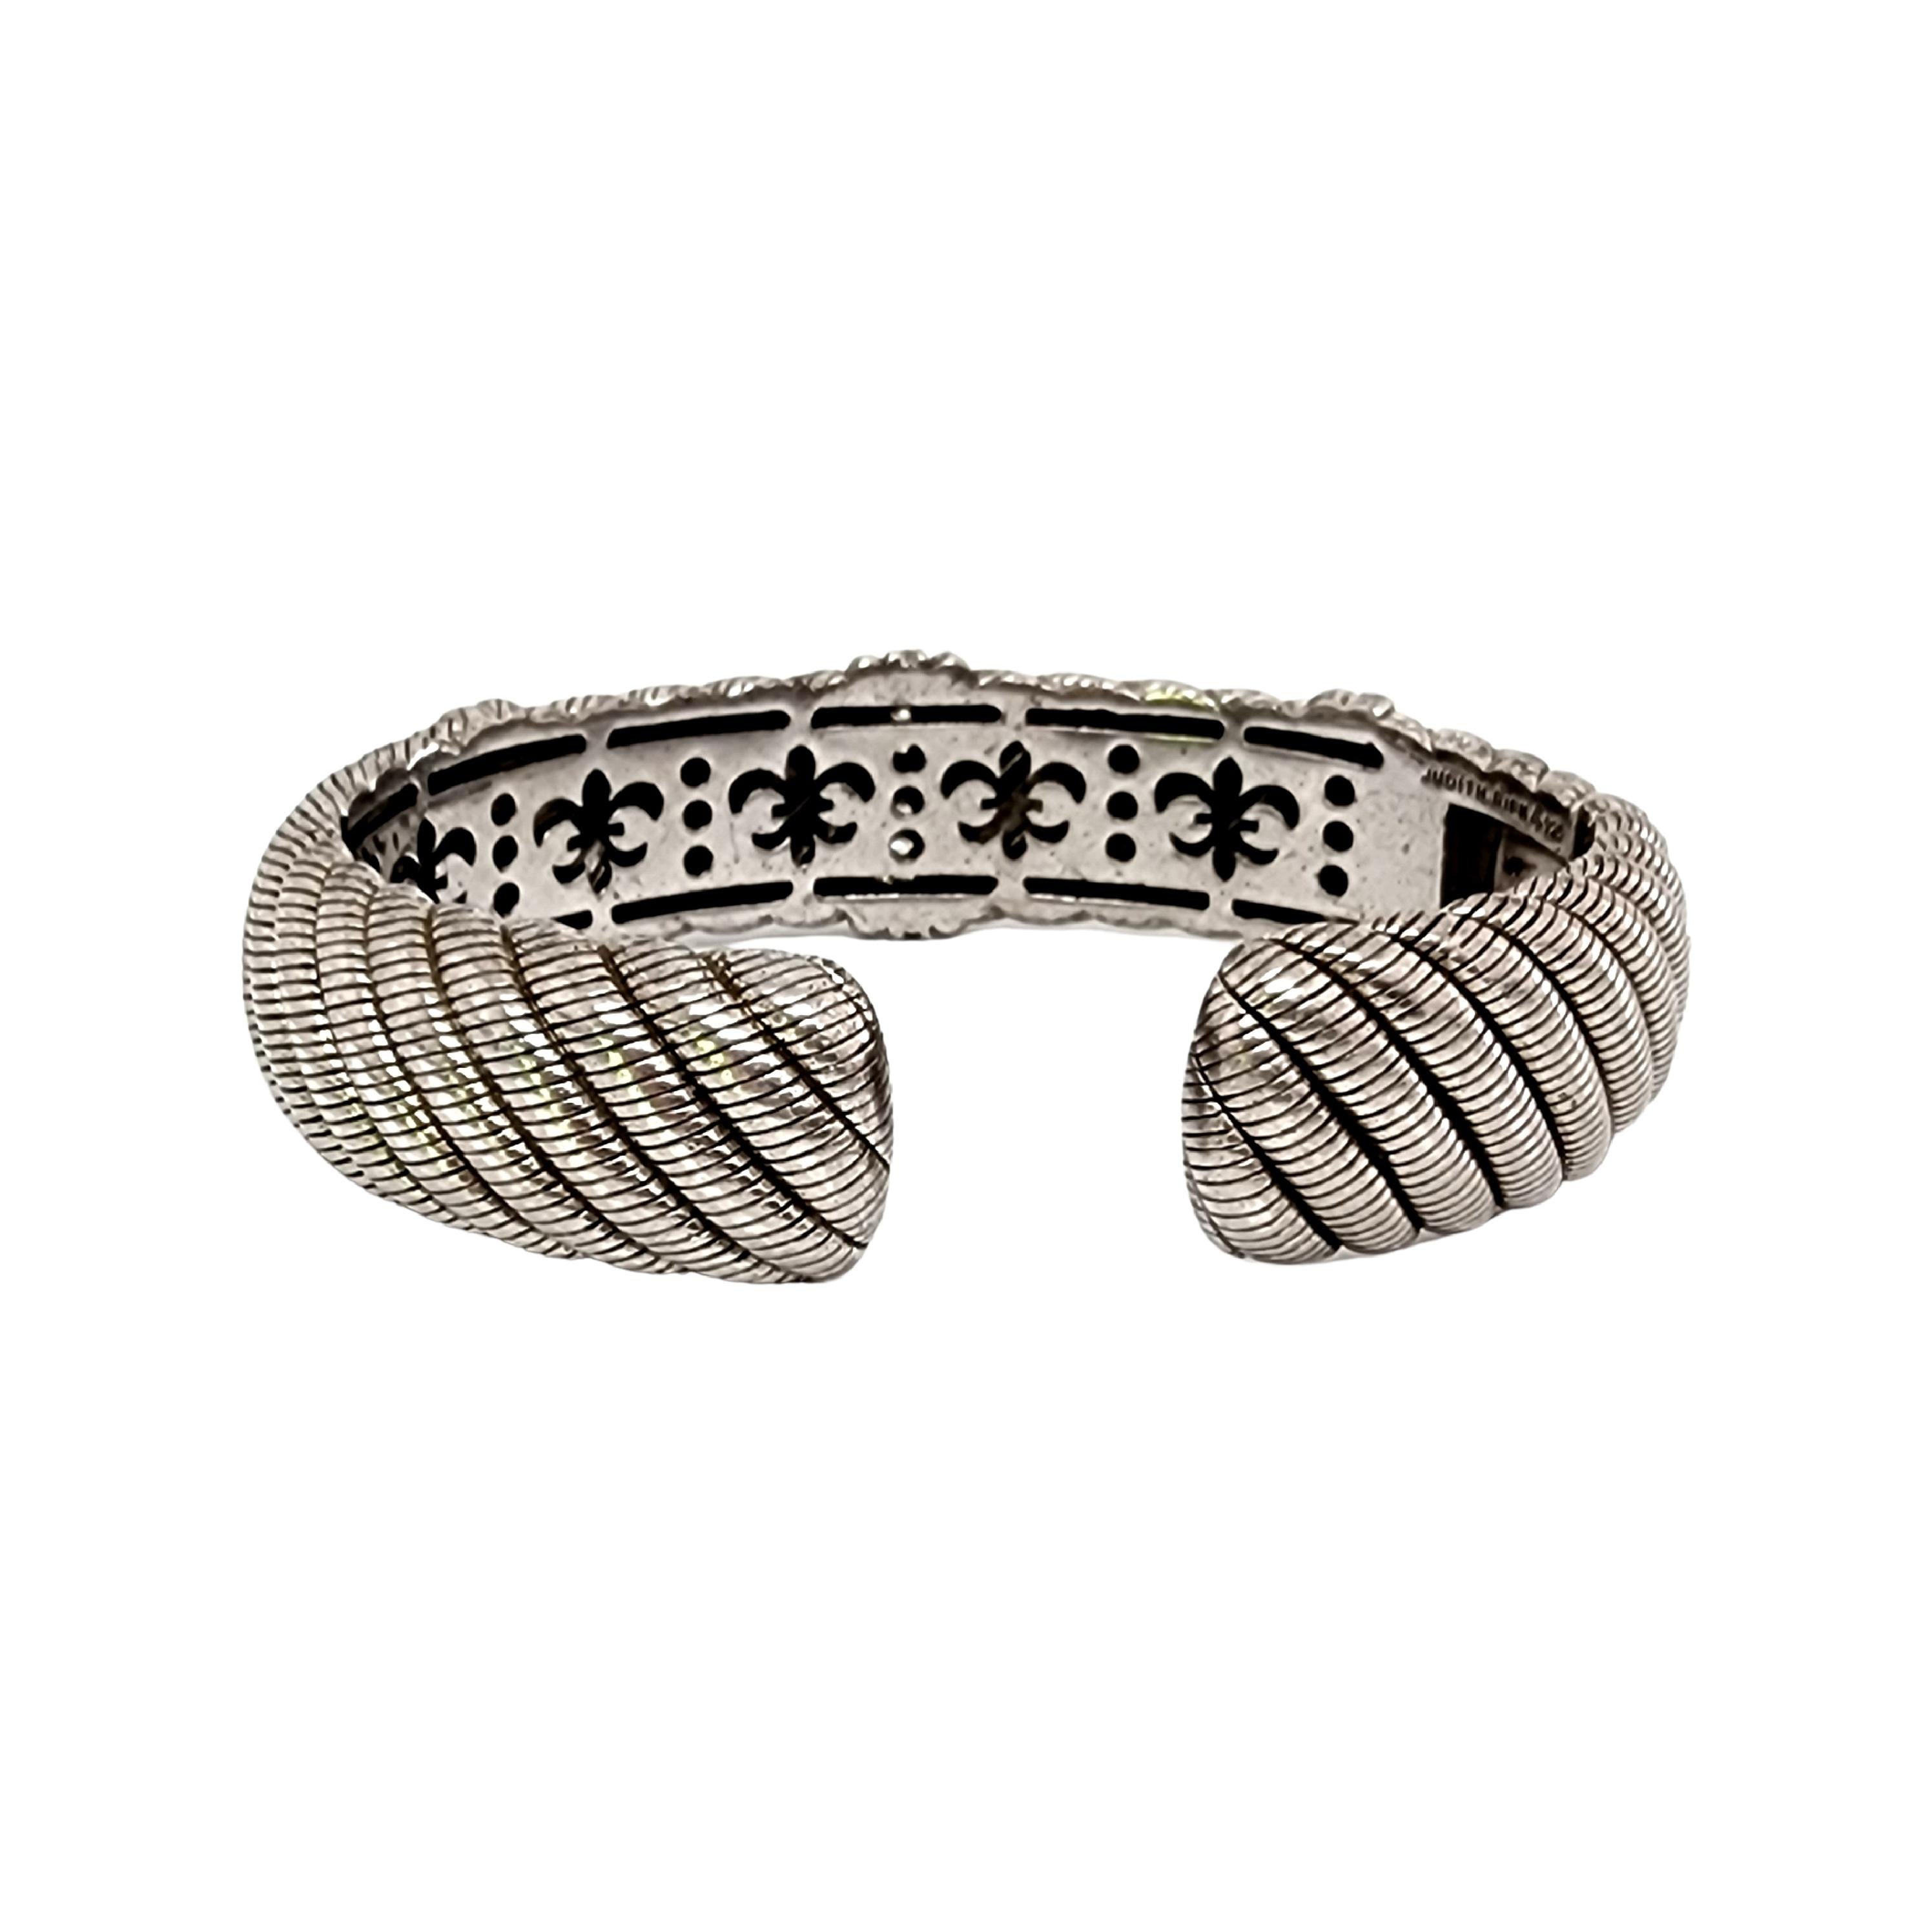 Round Cut Judith Ripka S S CZ Diamonique Wide Cable Twist Hinged Cuff Bracelet #12821 For Sale